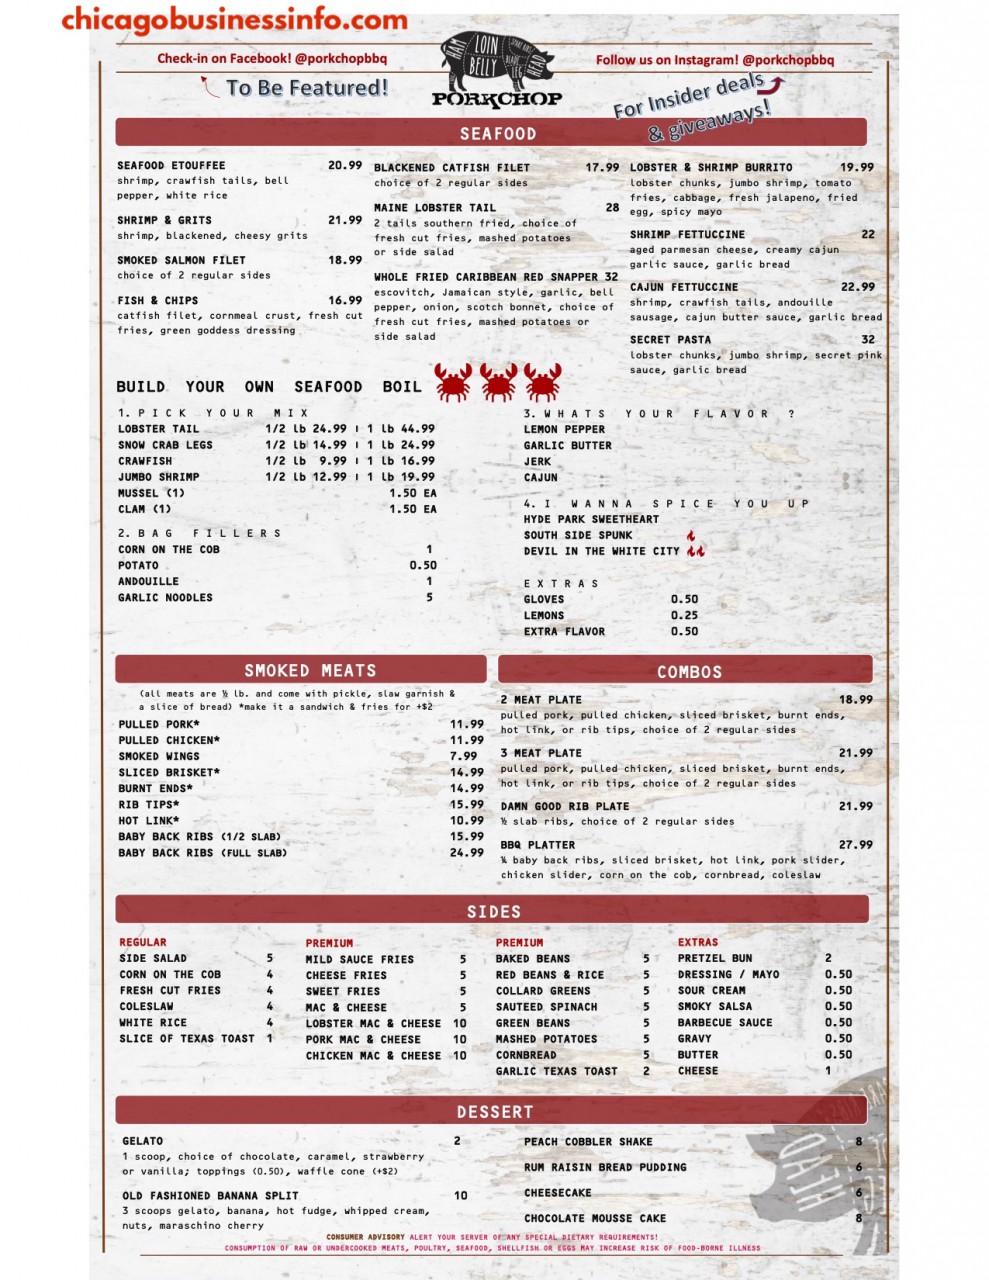 Porkchop chicago menu 1